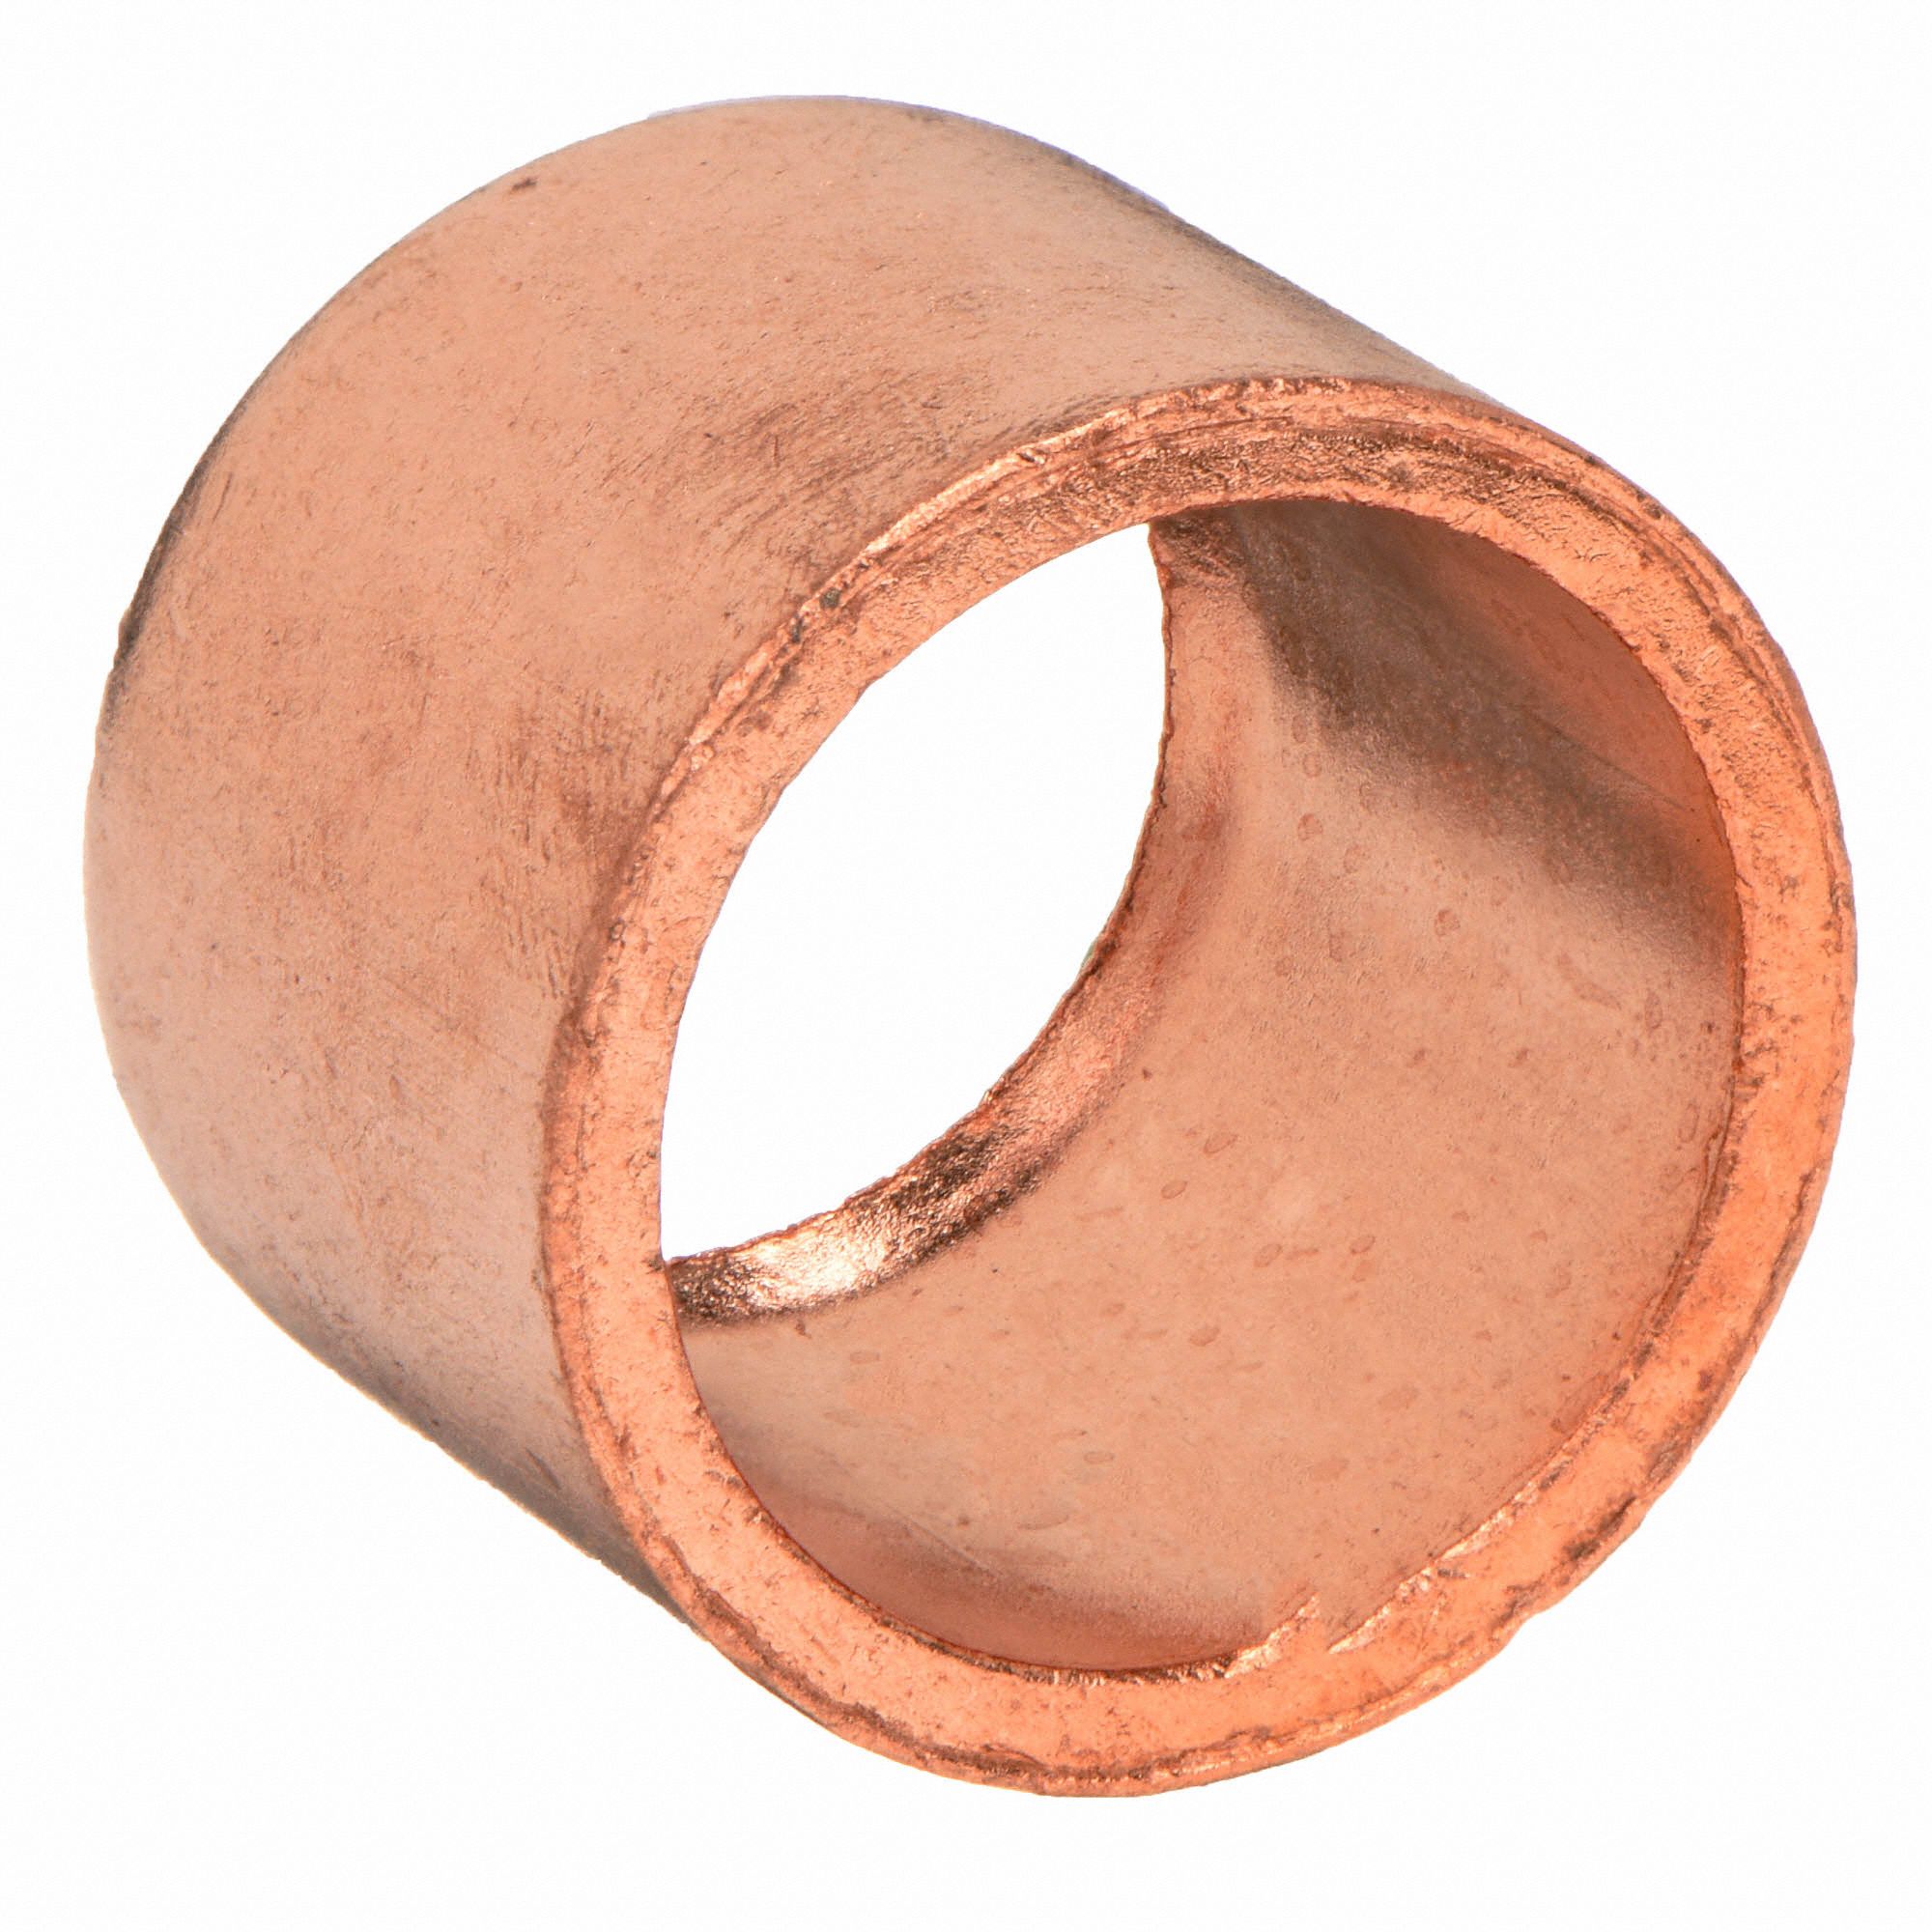 NIBCO 618 1/2x1/4 Flush Bushing,Wrot Copper,1/2 x 1/4 In